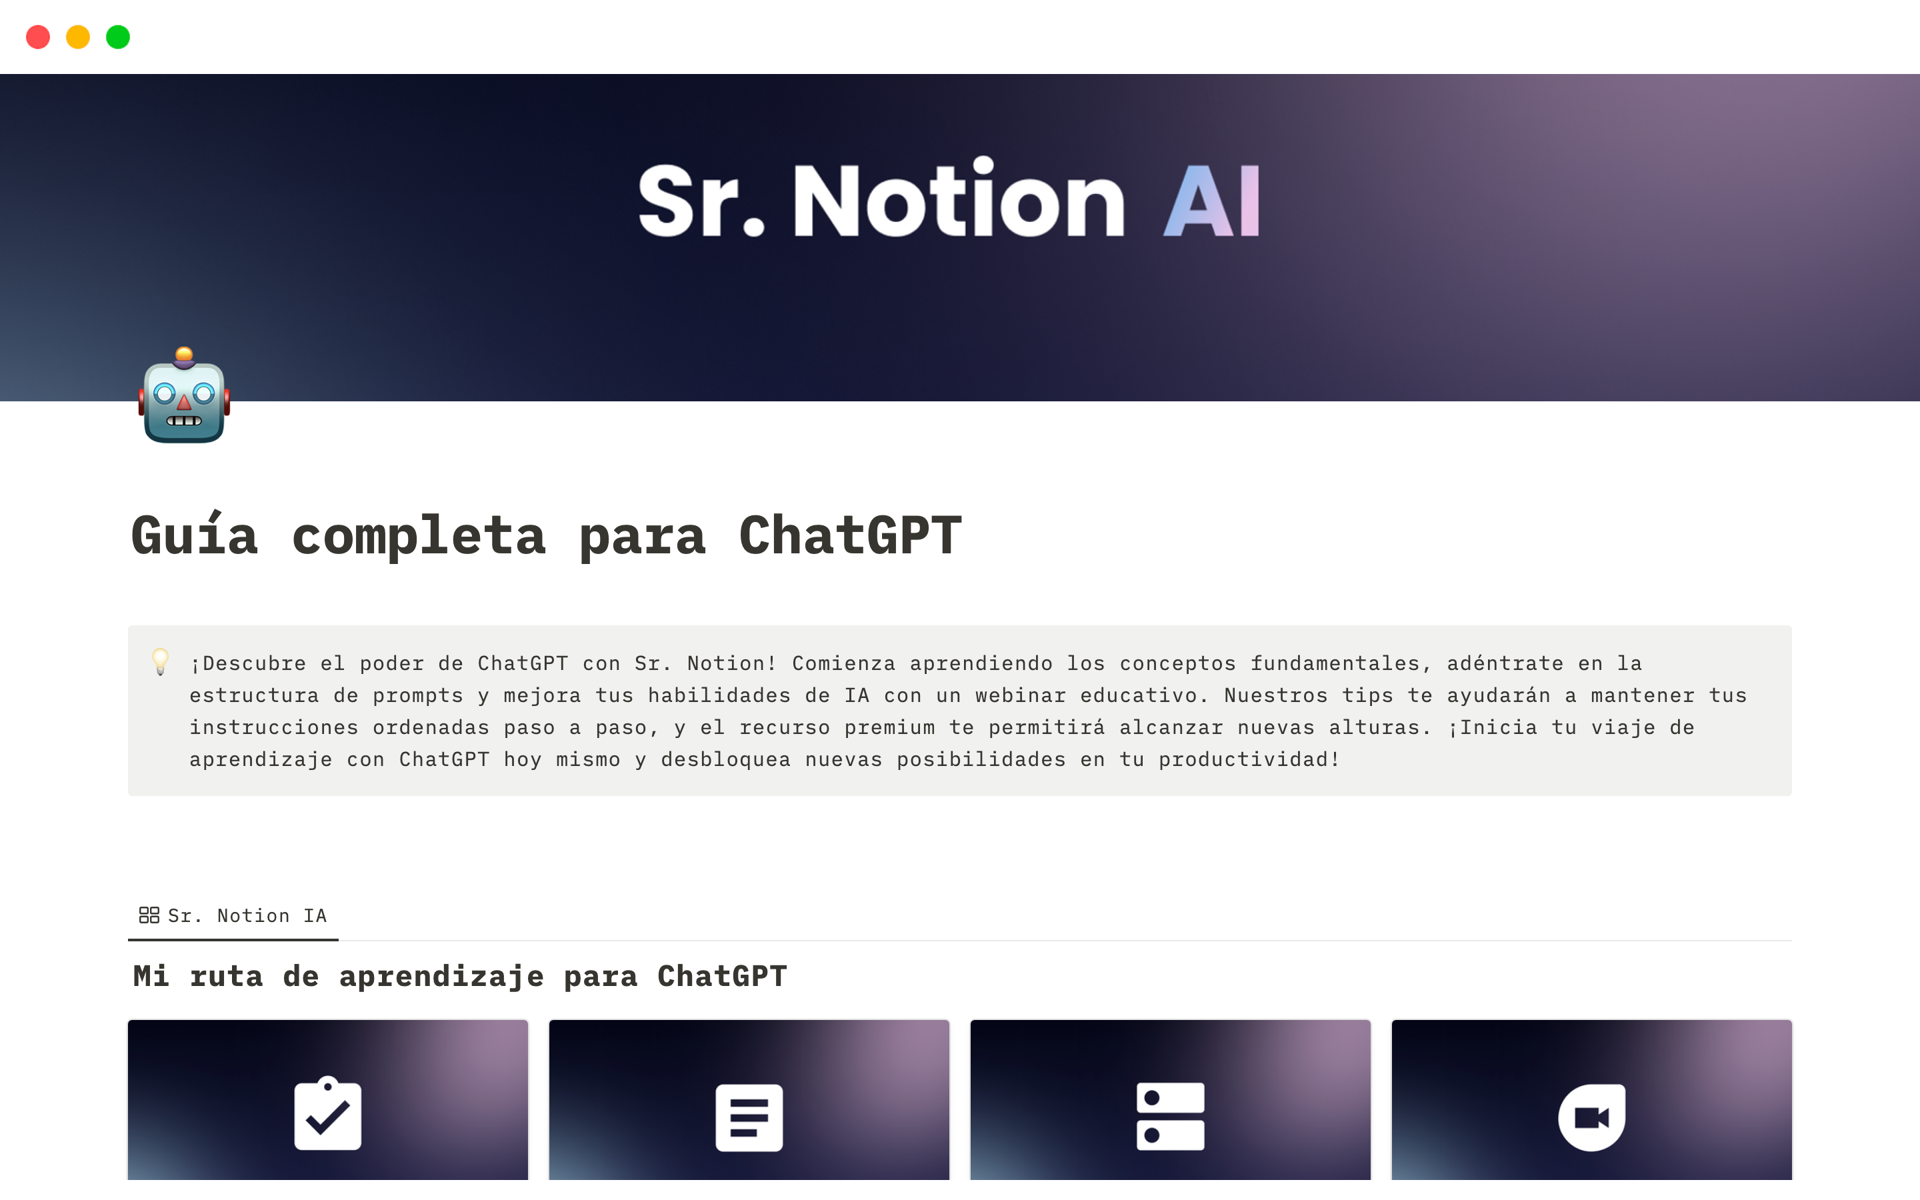 ¡Descubre el poder de ChatGPT con Sr. Notion!